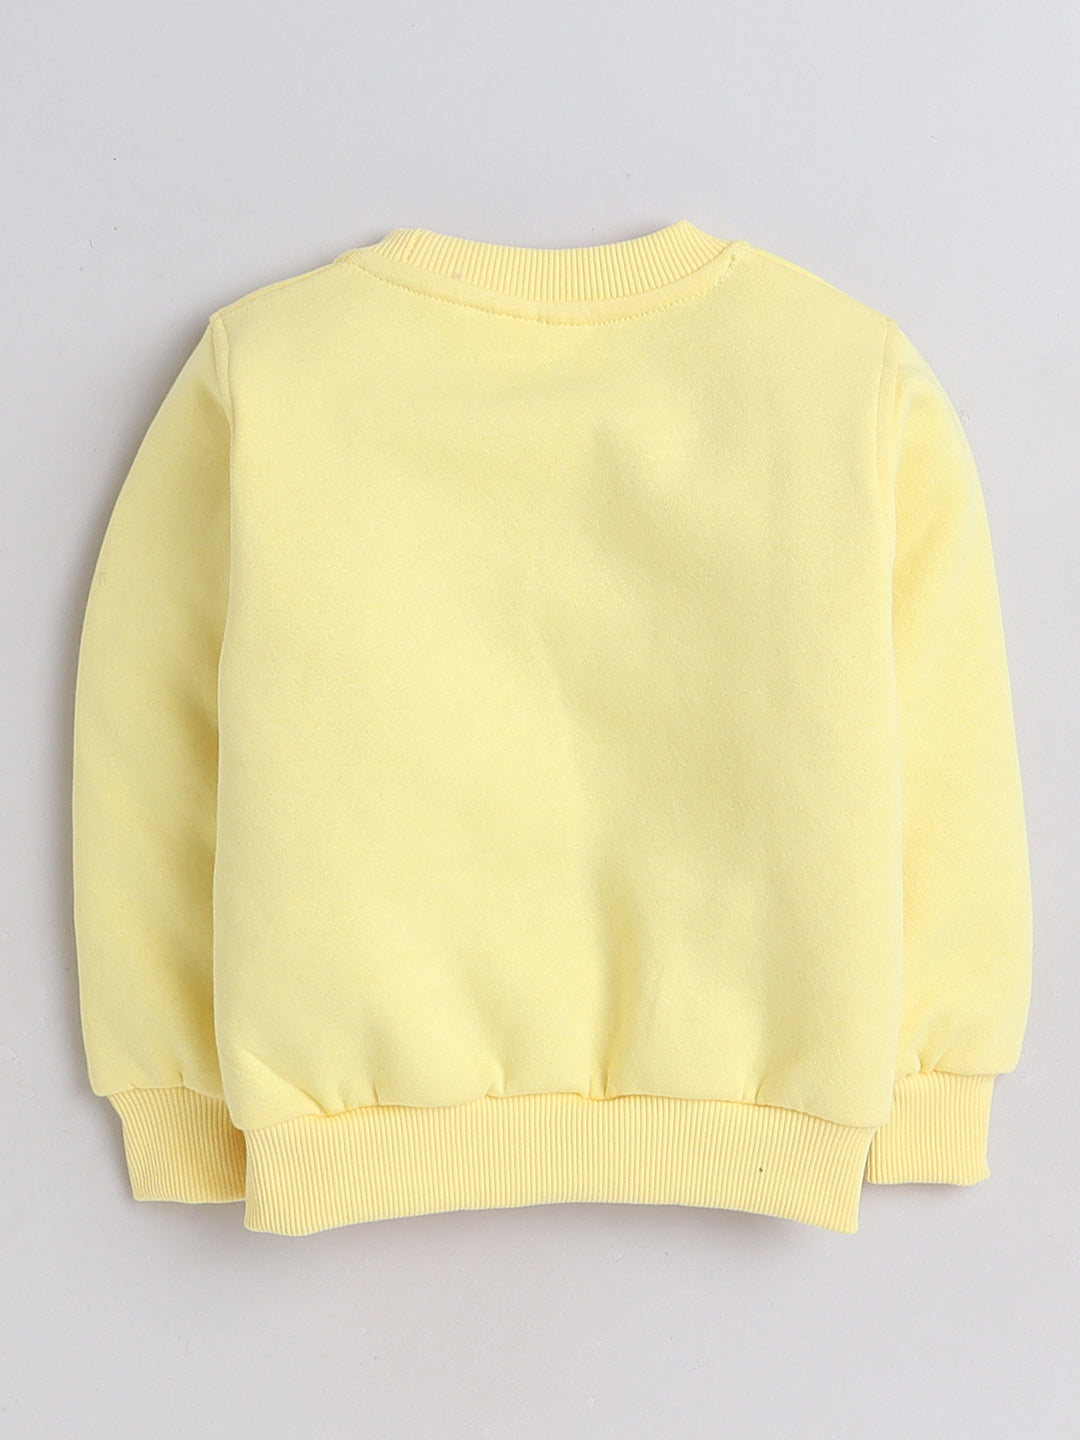 Knitting Doodles Kid's Sweatshirt with Warm Fleece- Light Yellow